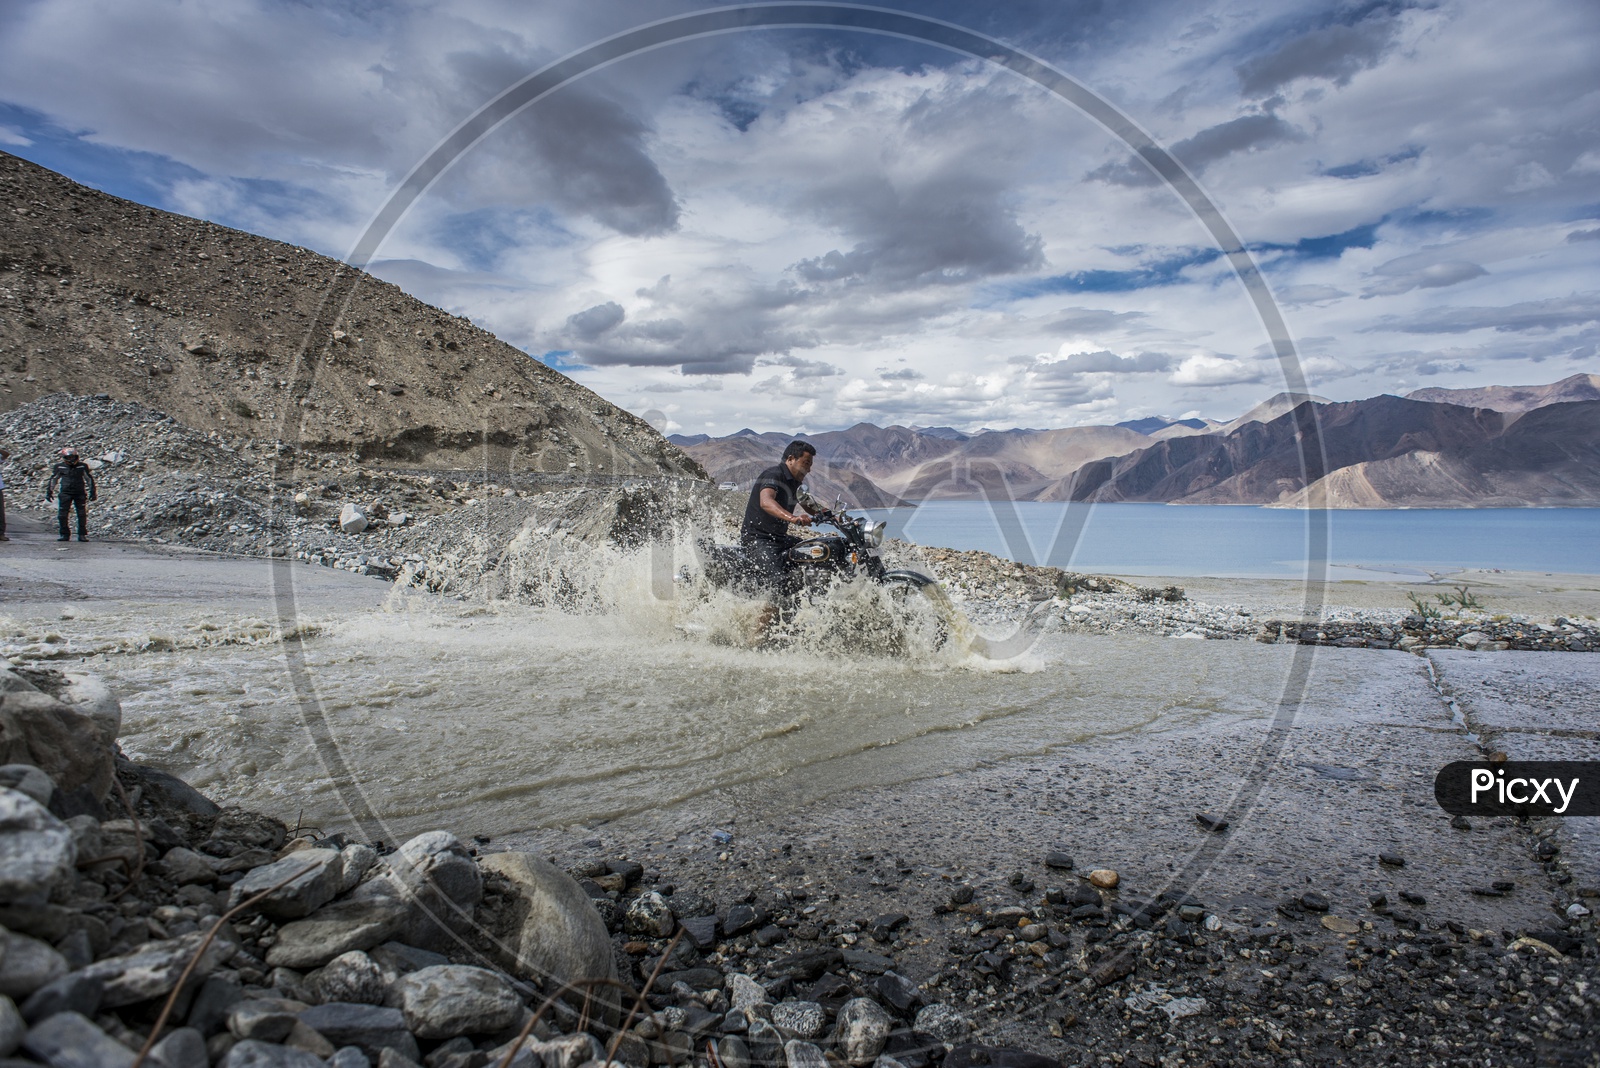 Royal Enfield Bike at Pangong Lake, Ladakh